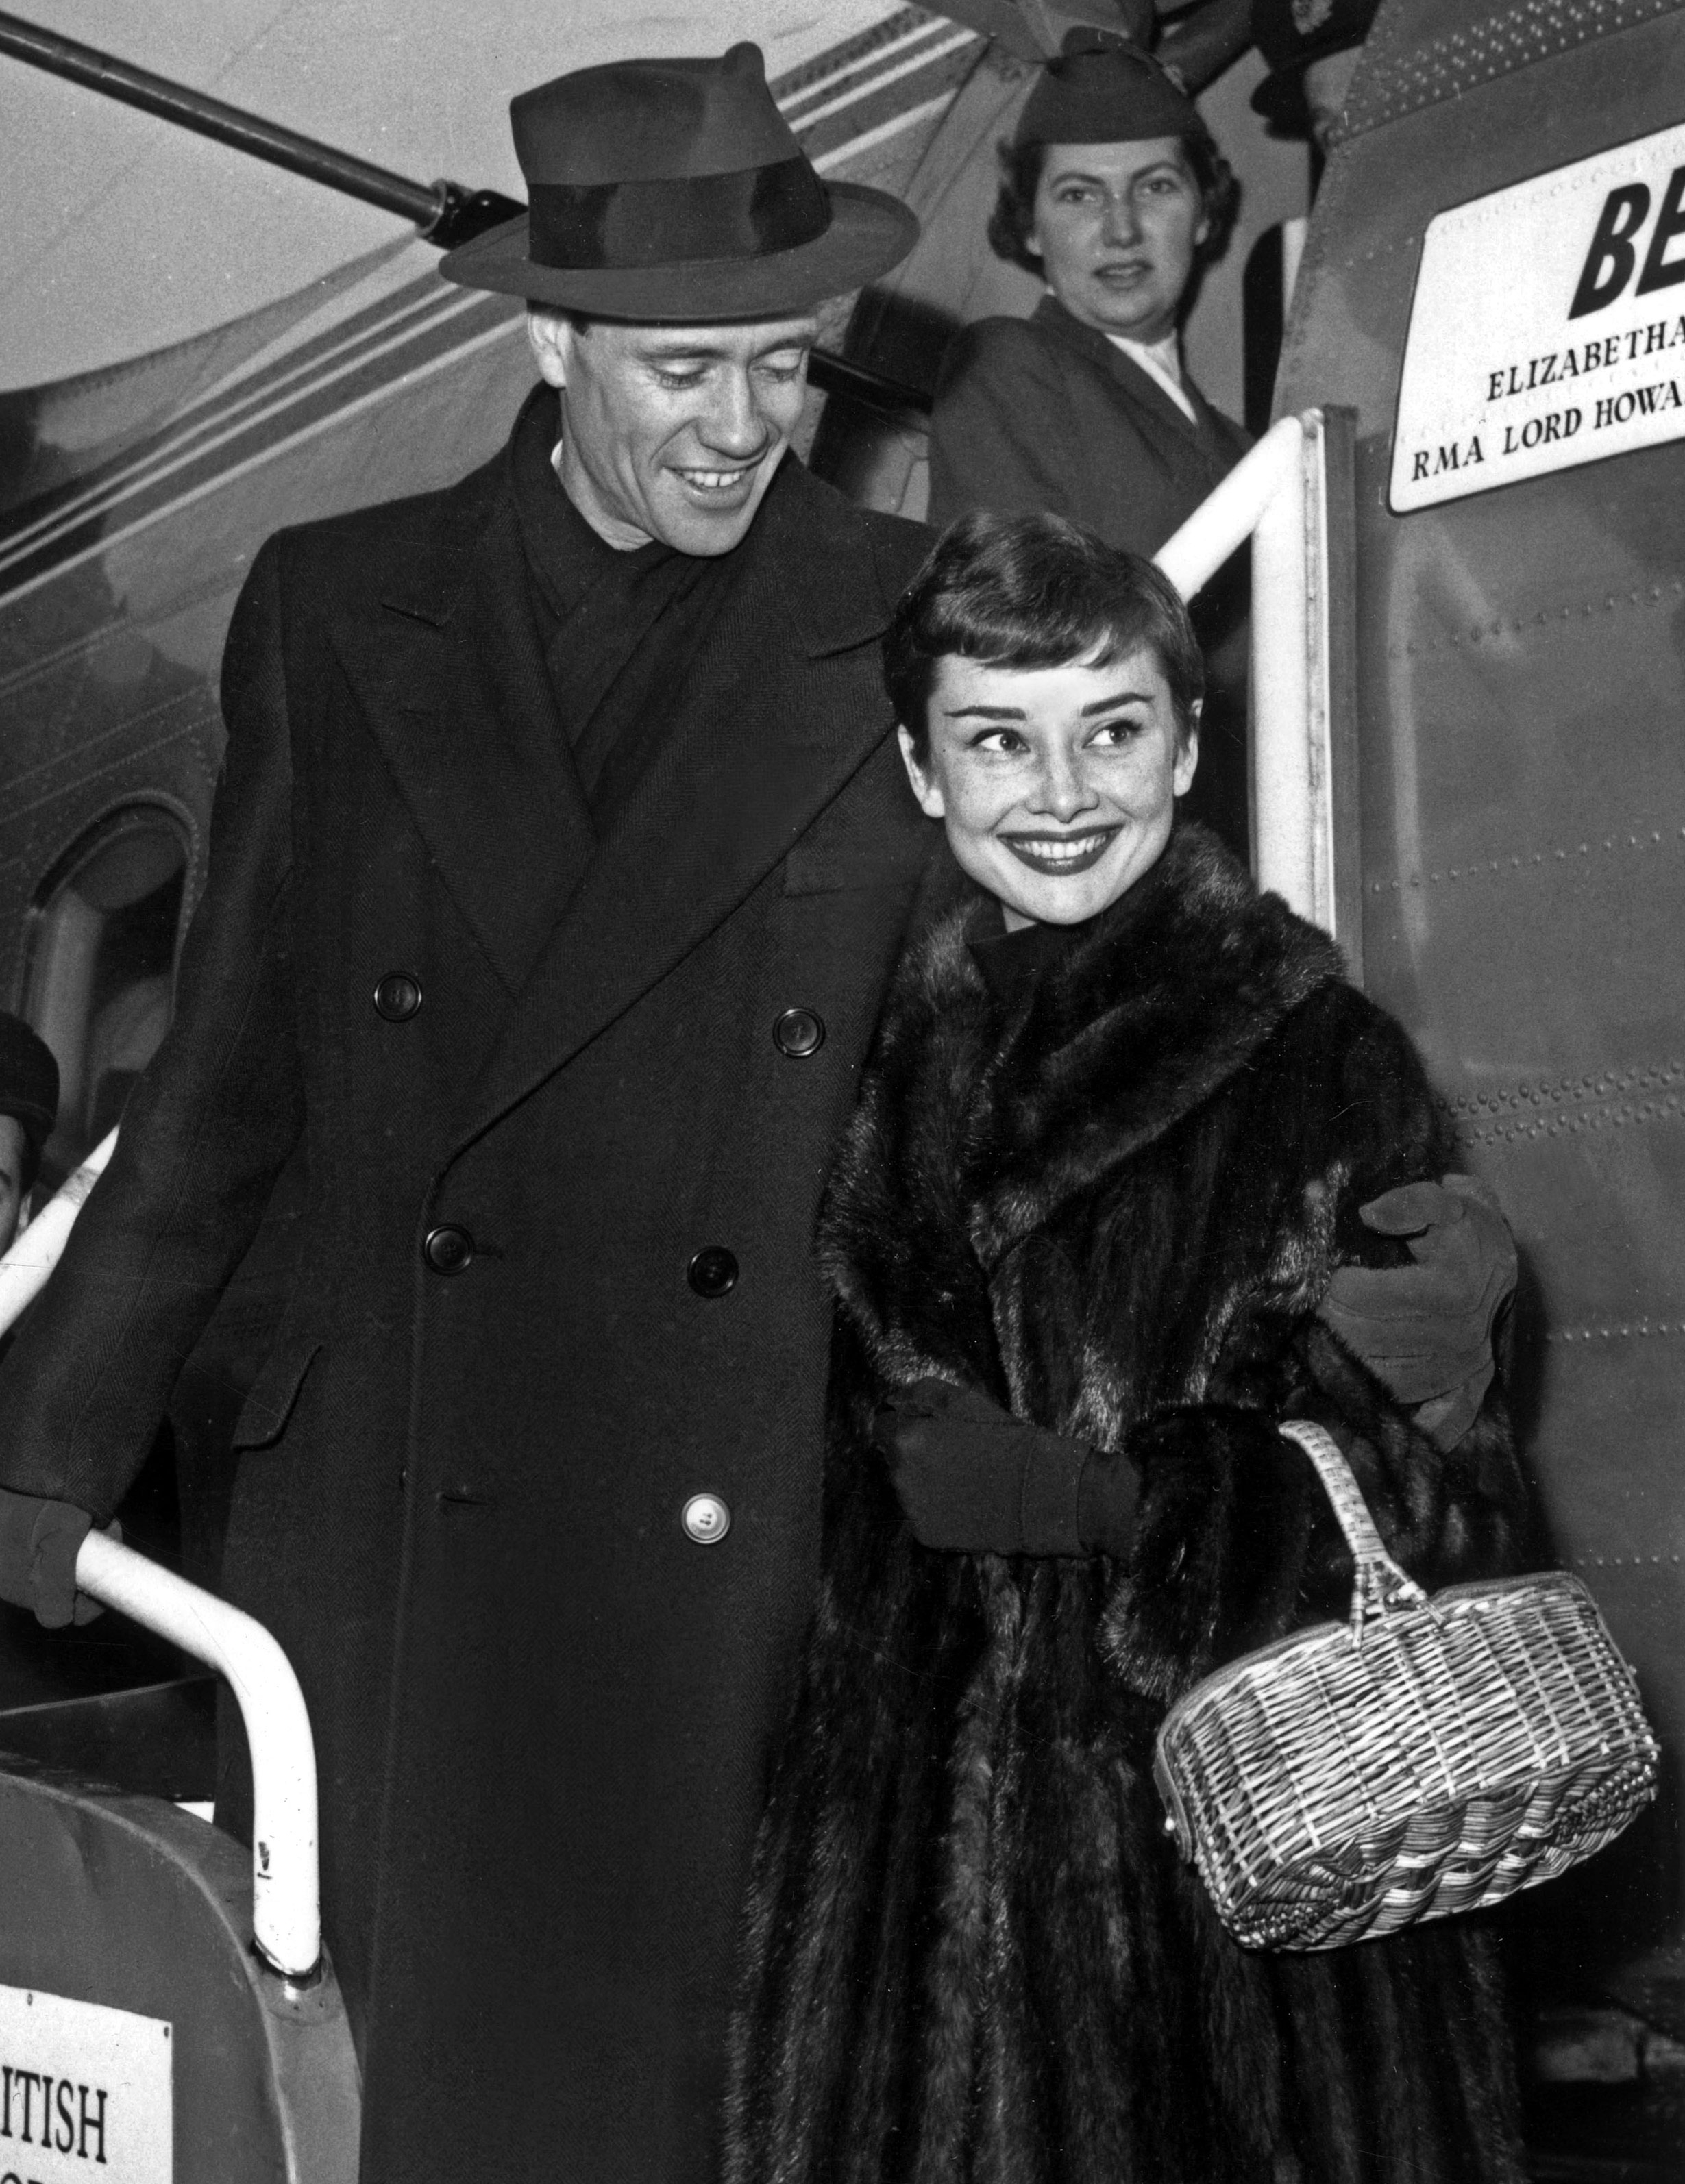 Bags - Audrey Hepburn Tribute